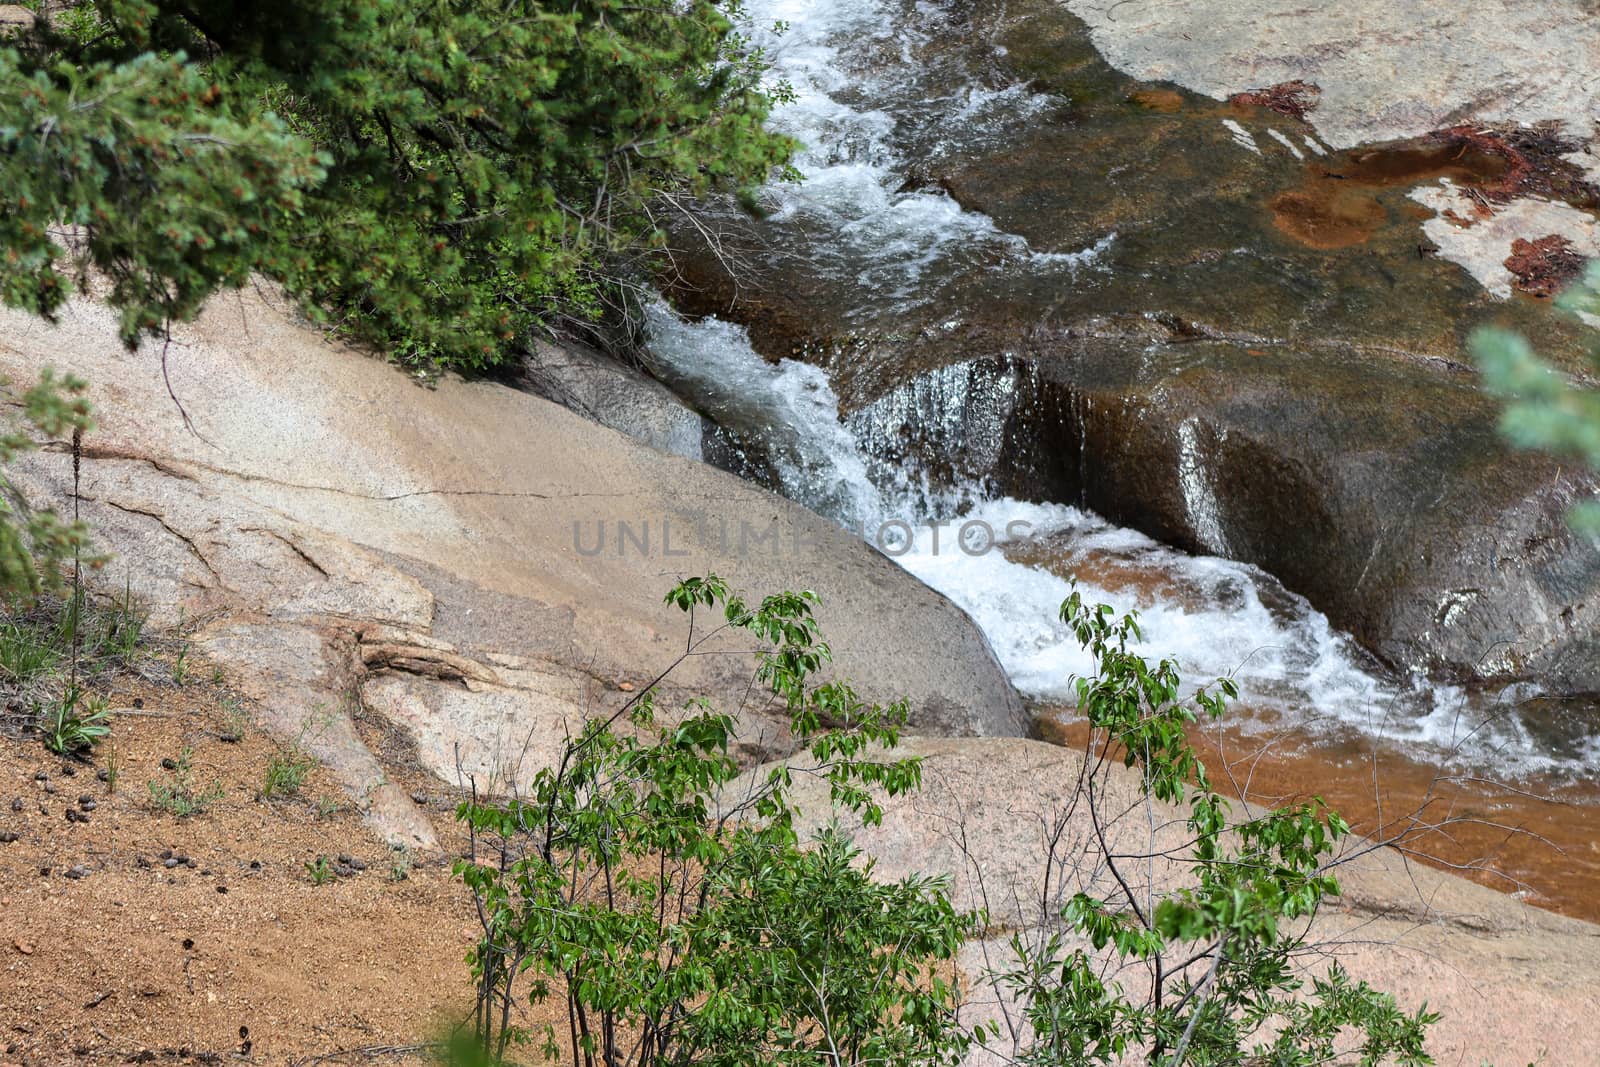 Helen hunt's falls Colorado waterfalls flowing stream summer 2019